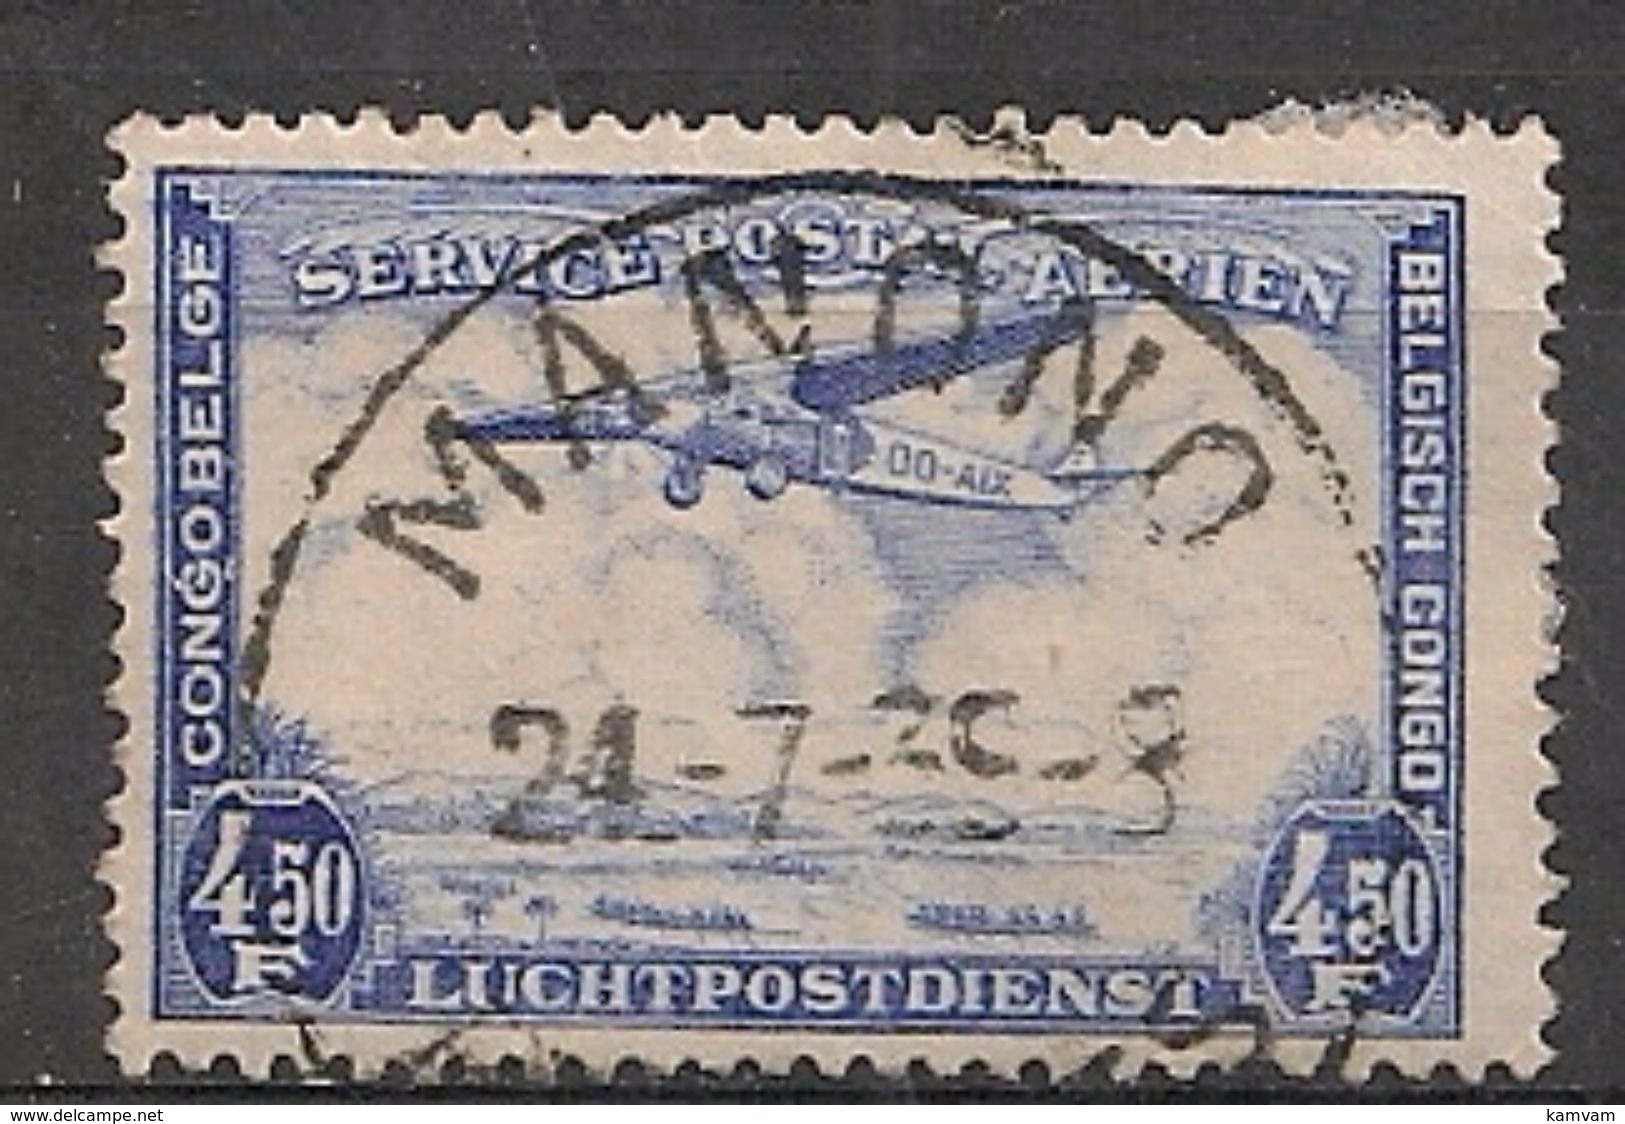 CONGO BELGE PA 11 MANONO - Used Stamps